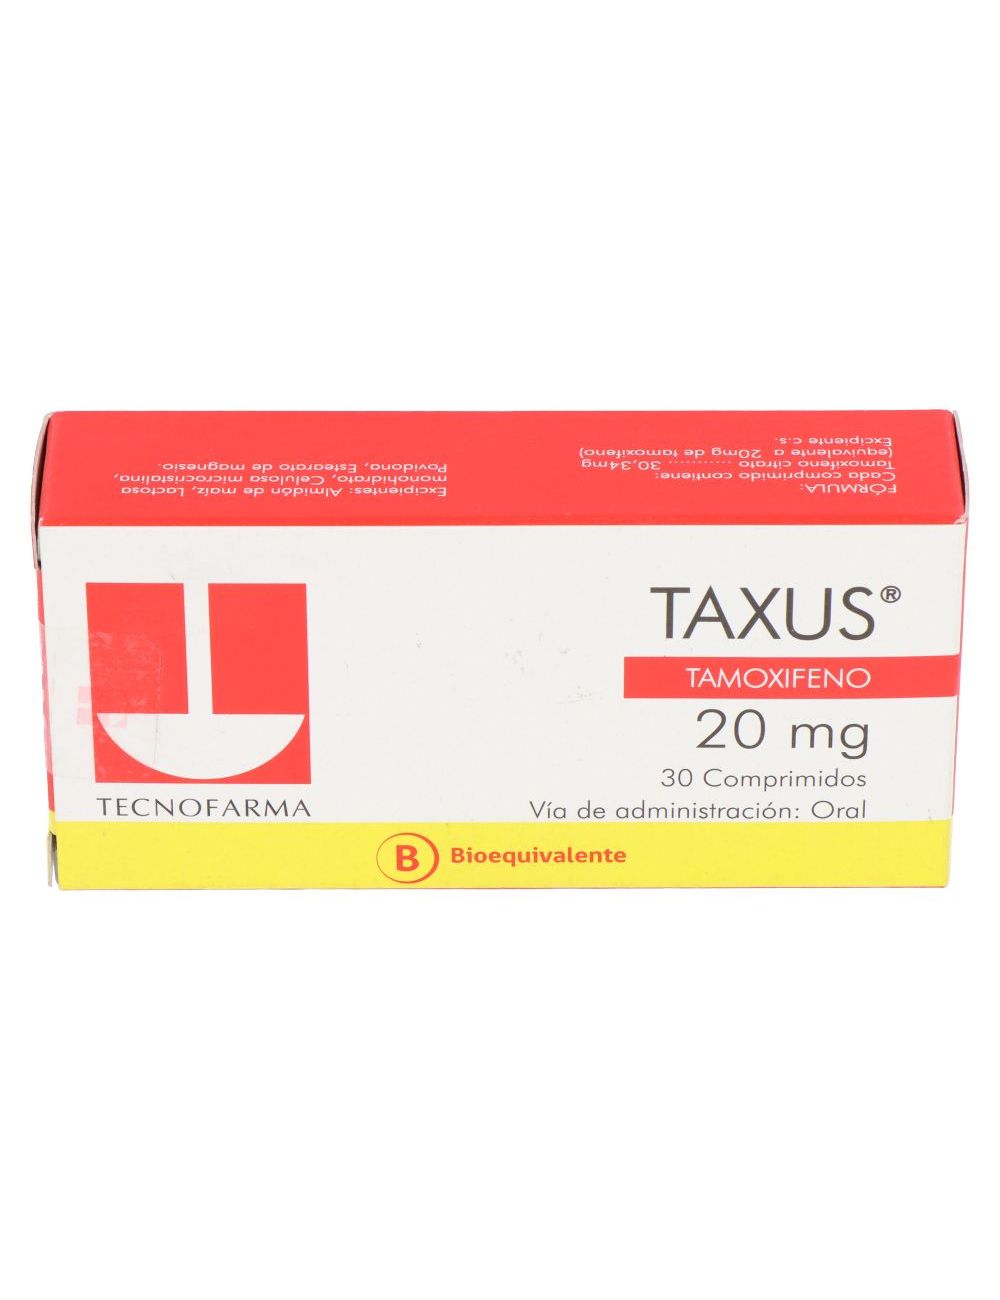 Precio Tamoxifeno Taxus 20 mg 30 Comprimidos | Farmalisto CL